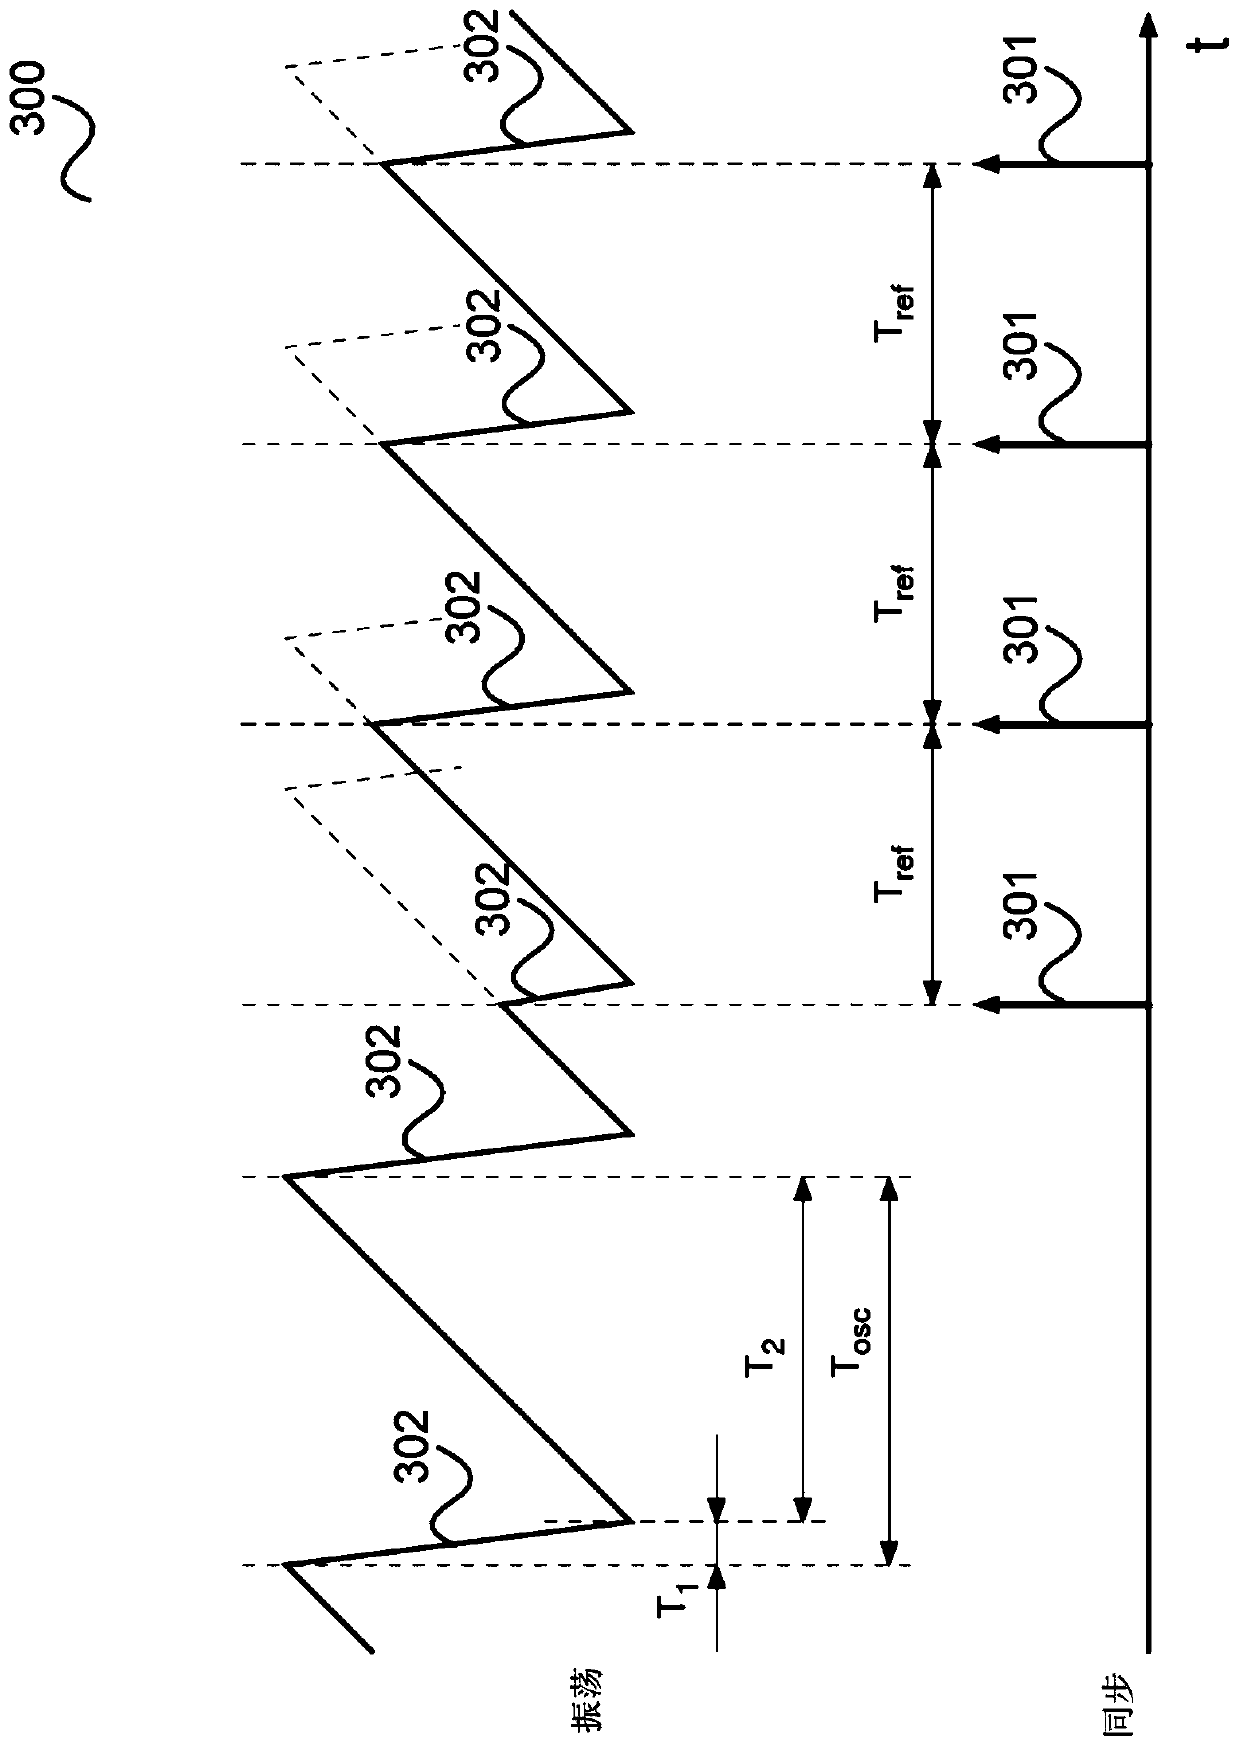 Oscillator arrangement and method for synchronizing an oscillator